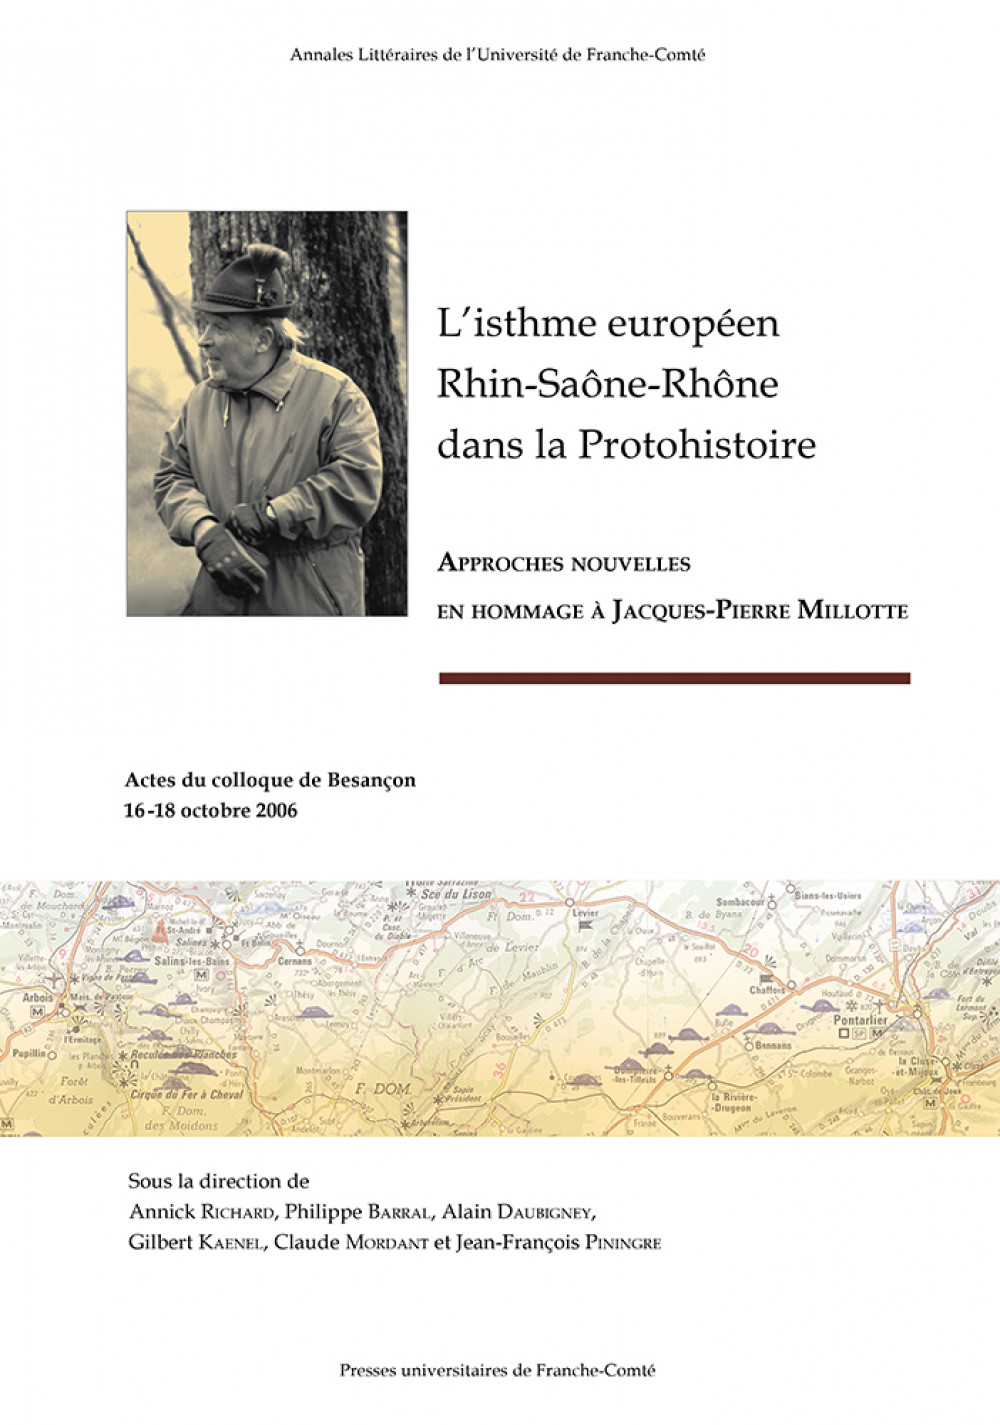 L'isthme européen Rhin-Saône-Rhône dans la Protohistoire